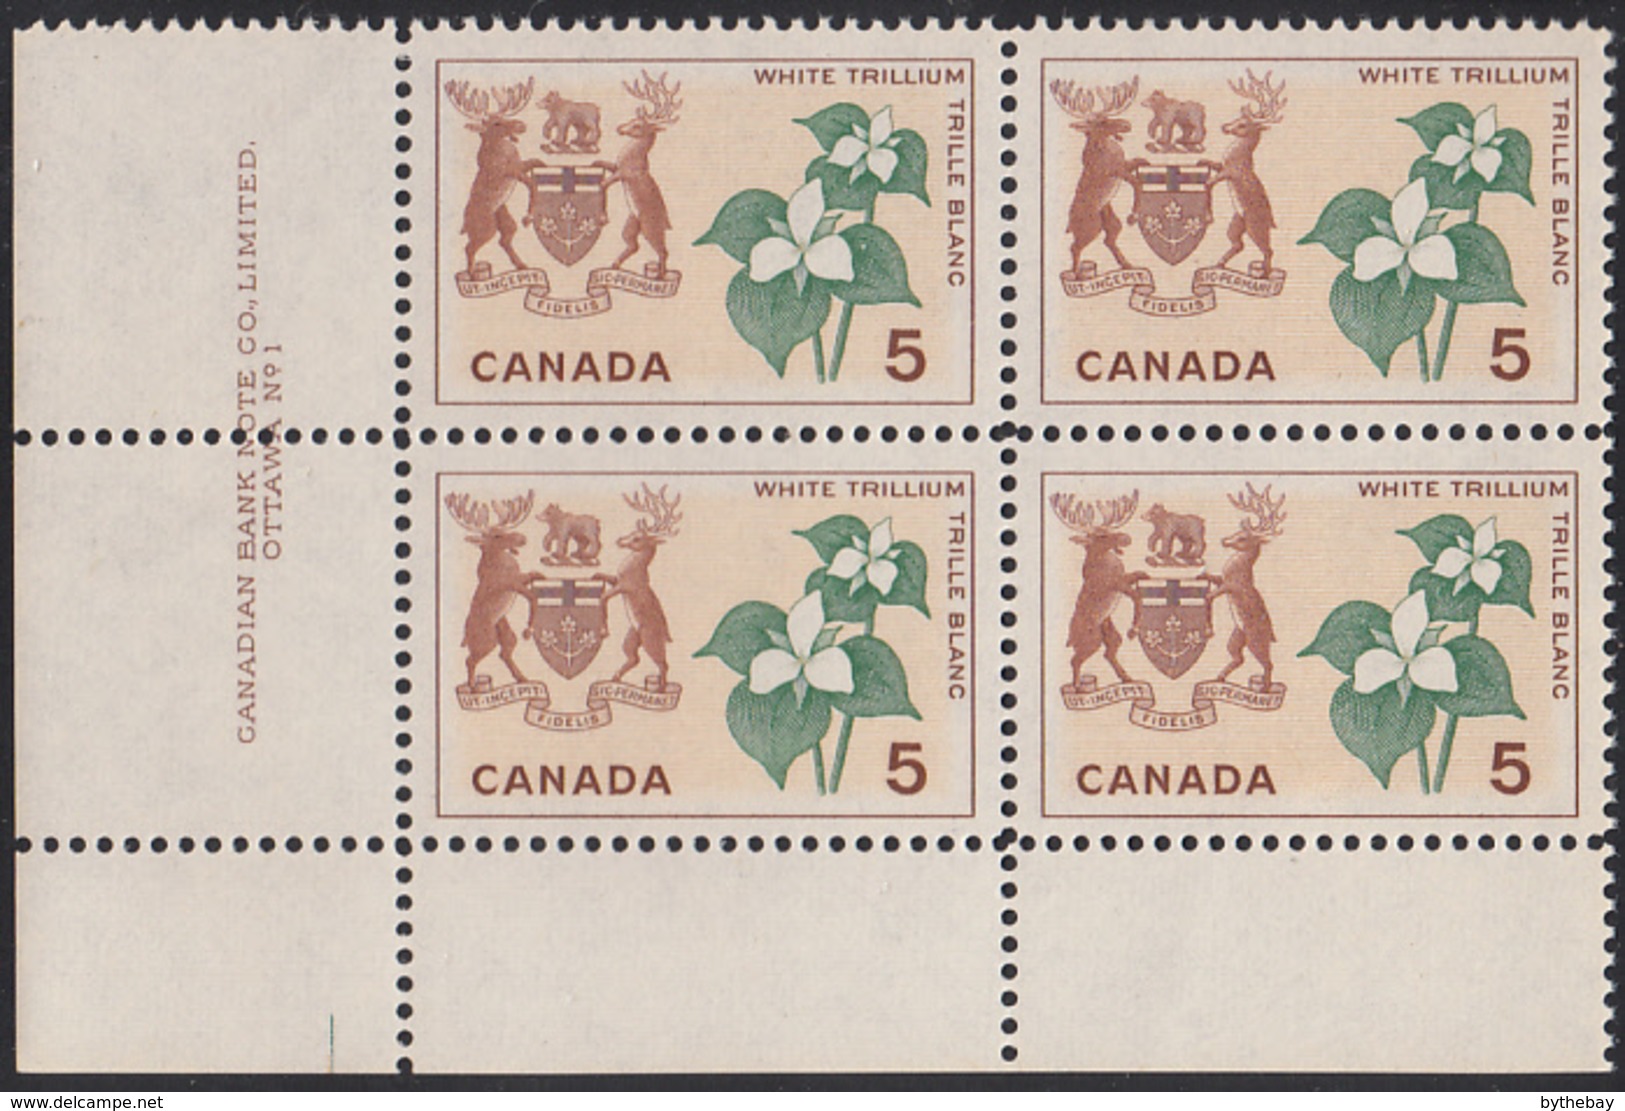 Canada 1964 MNH Sc #418 5c White Trillium Ontario Plate #1 LL - Plattennummern & Inschriften